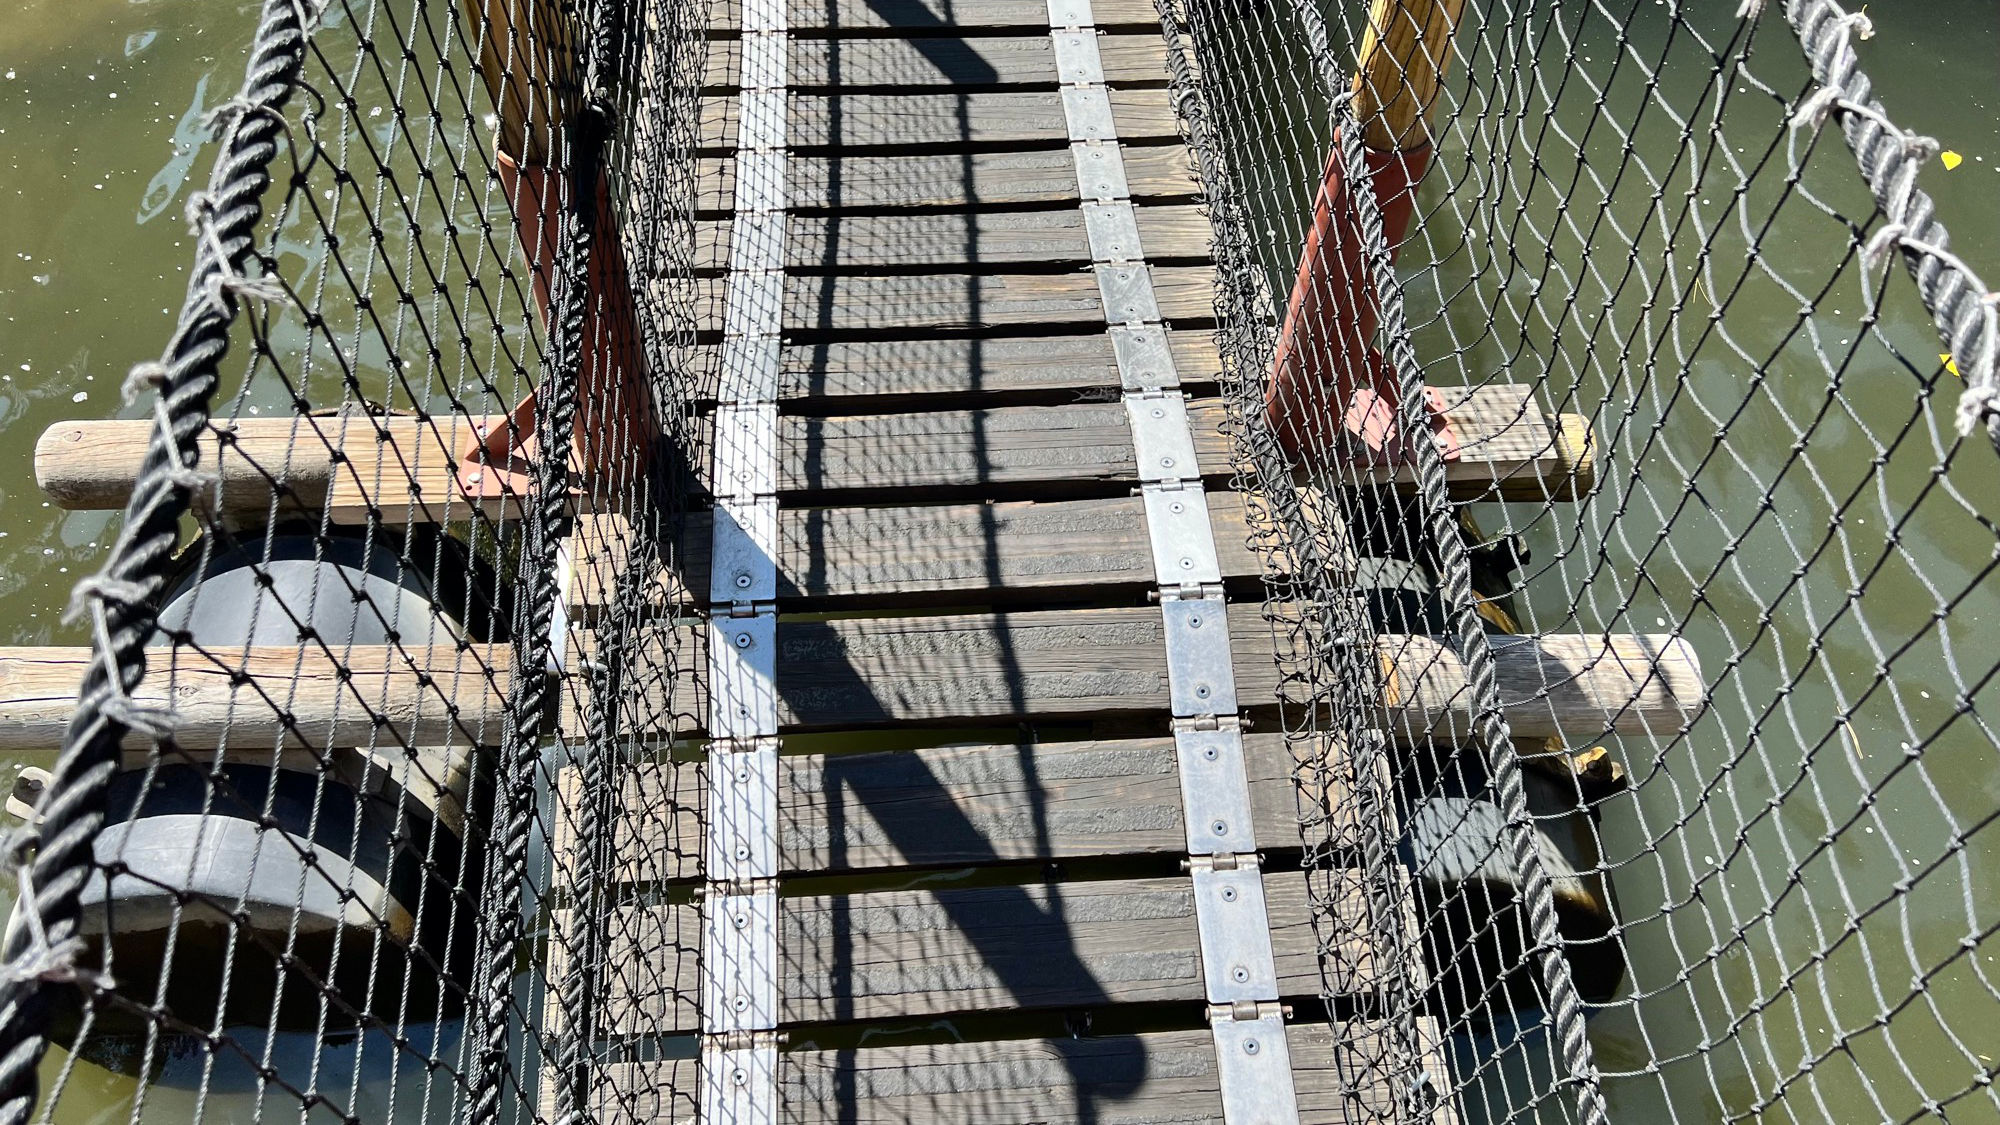 Grizzly Creek Rope Bridge